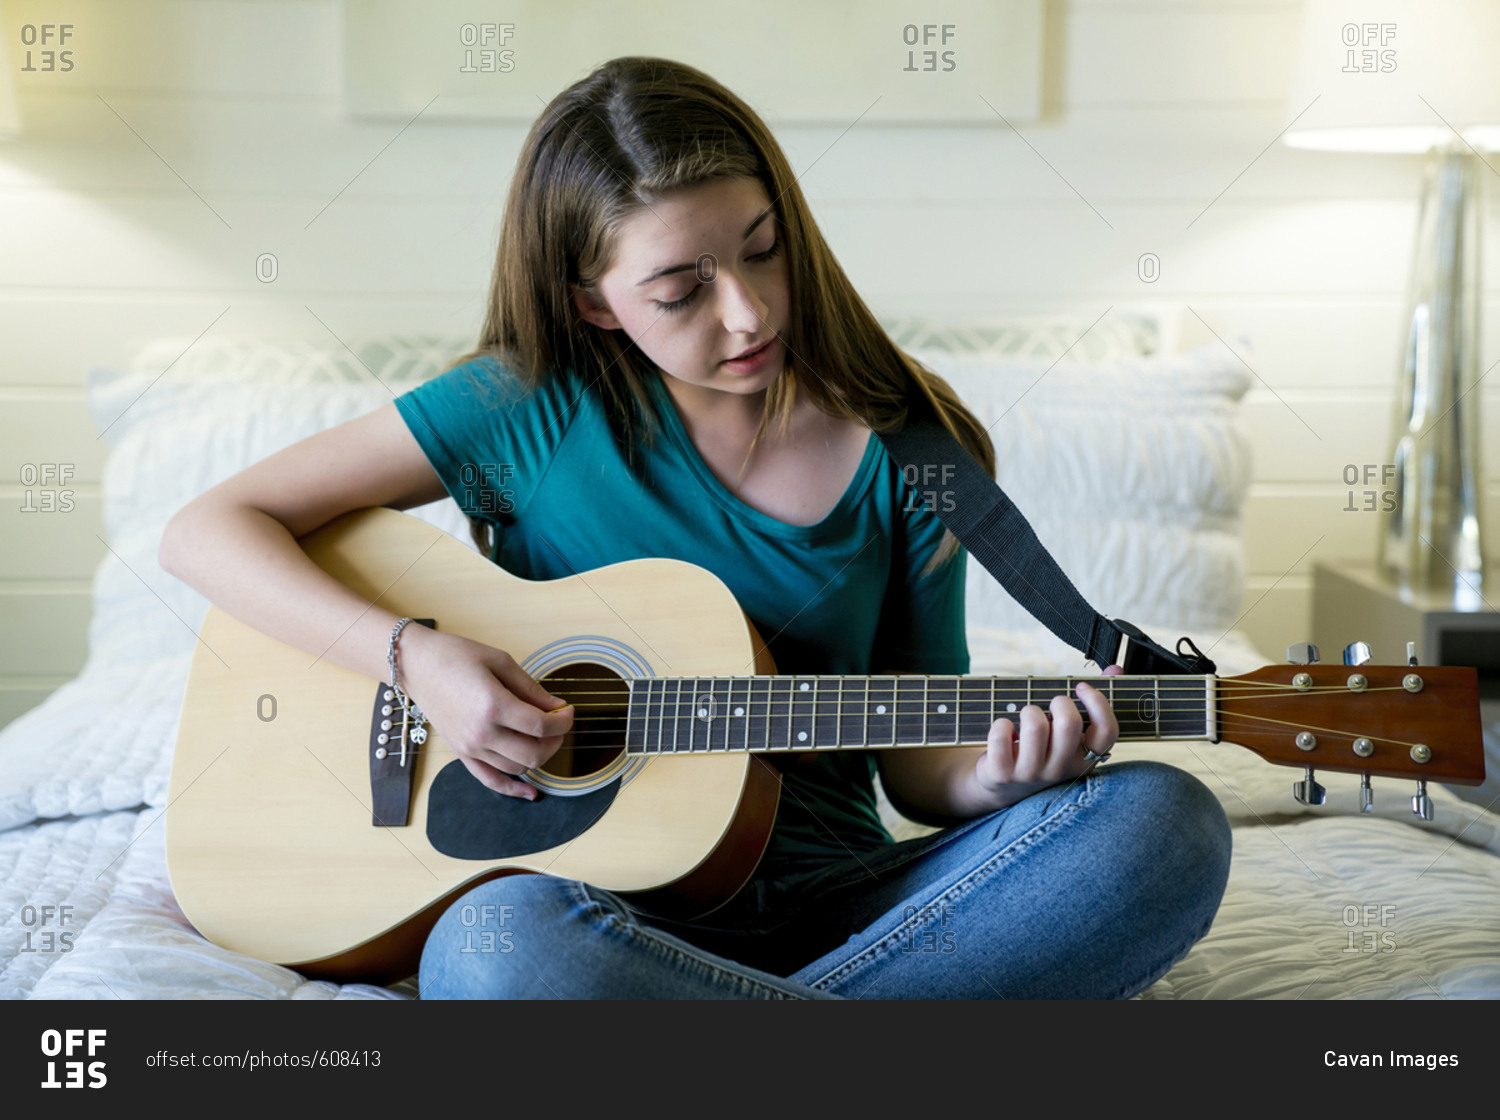 Teenage girl plucking guitar in bedroom